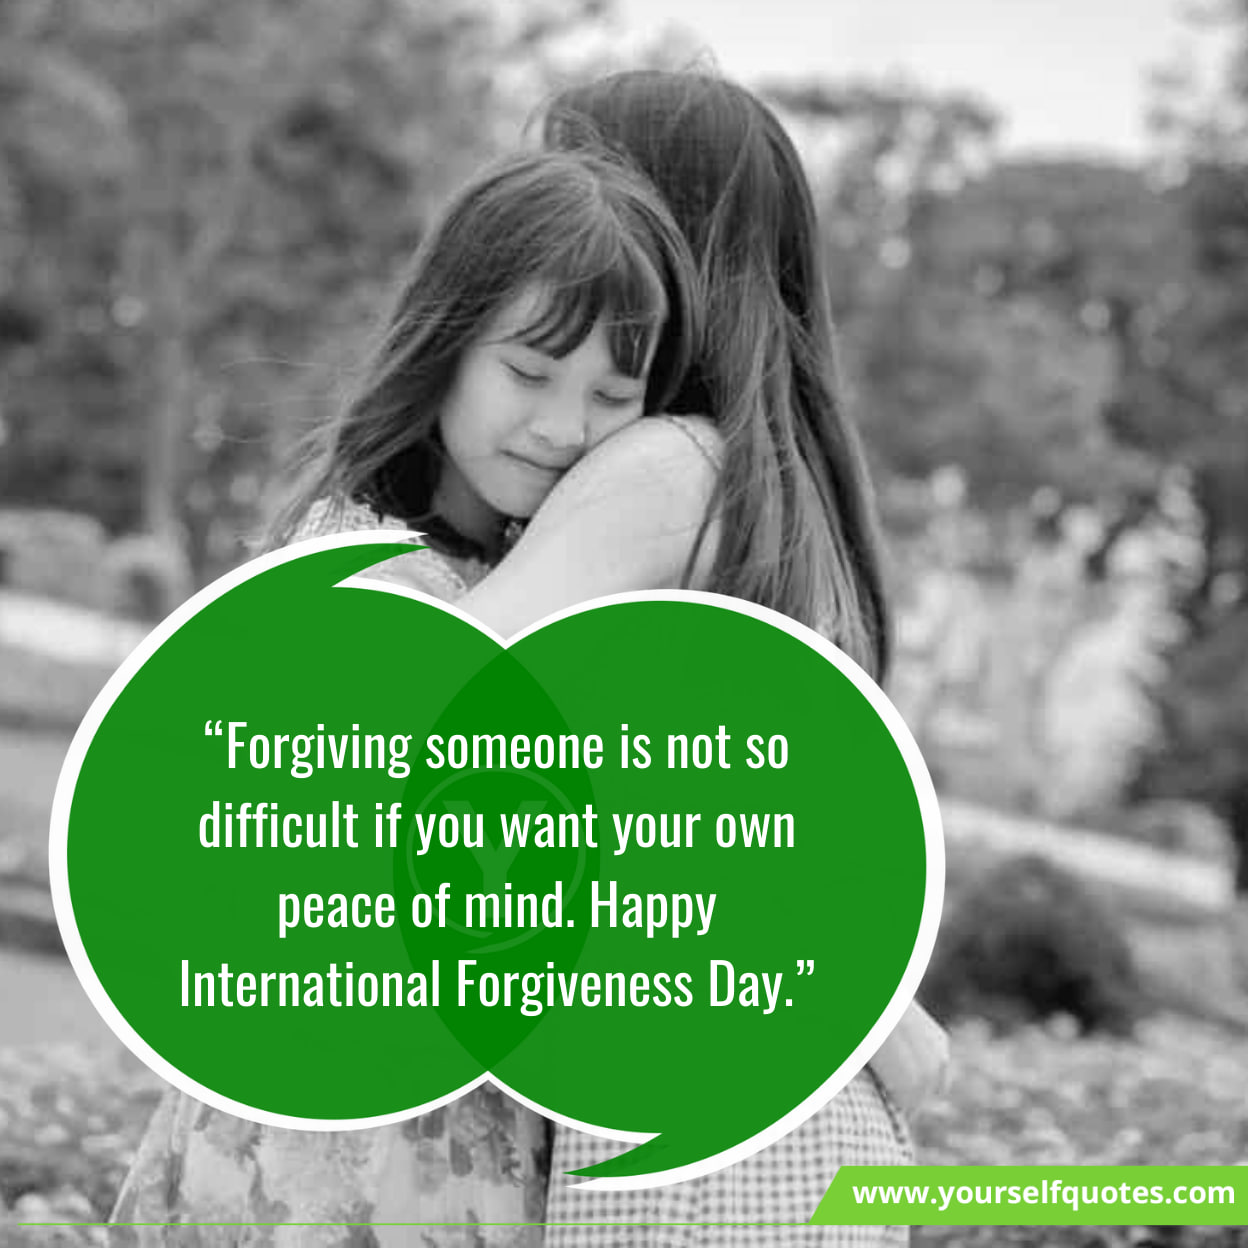 Forgiveness Day Sayings & Greetings